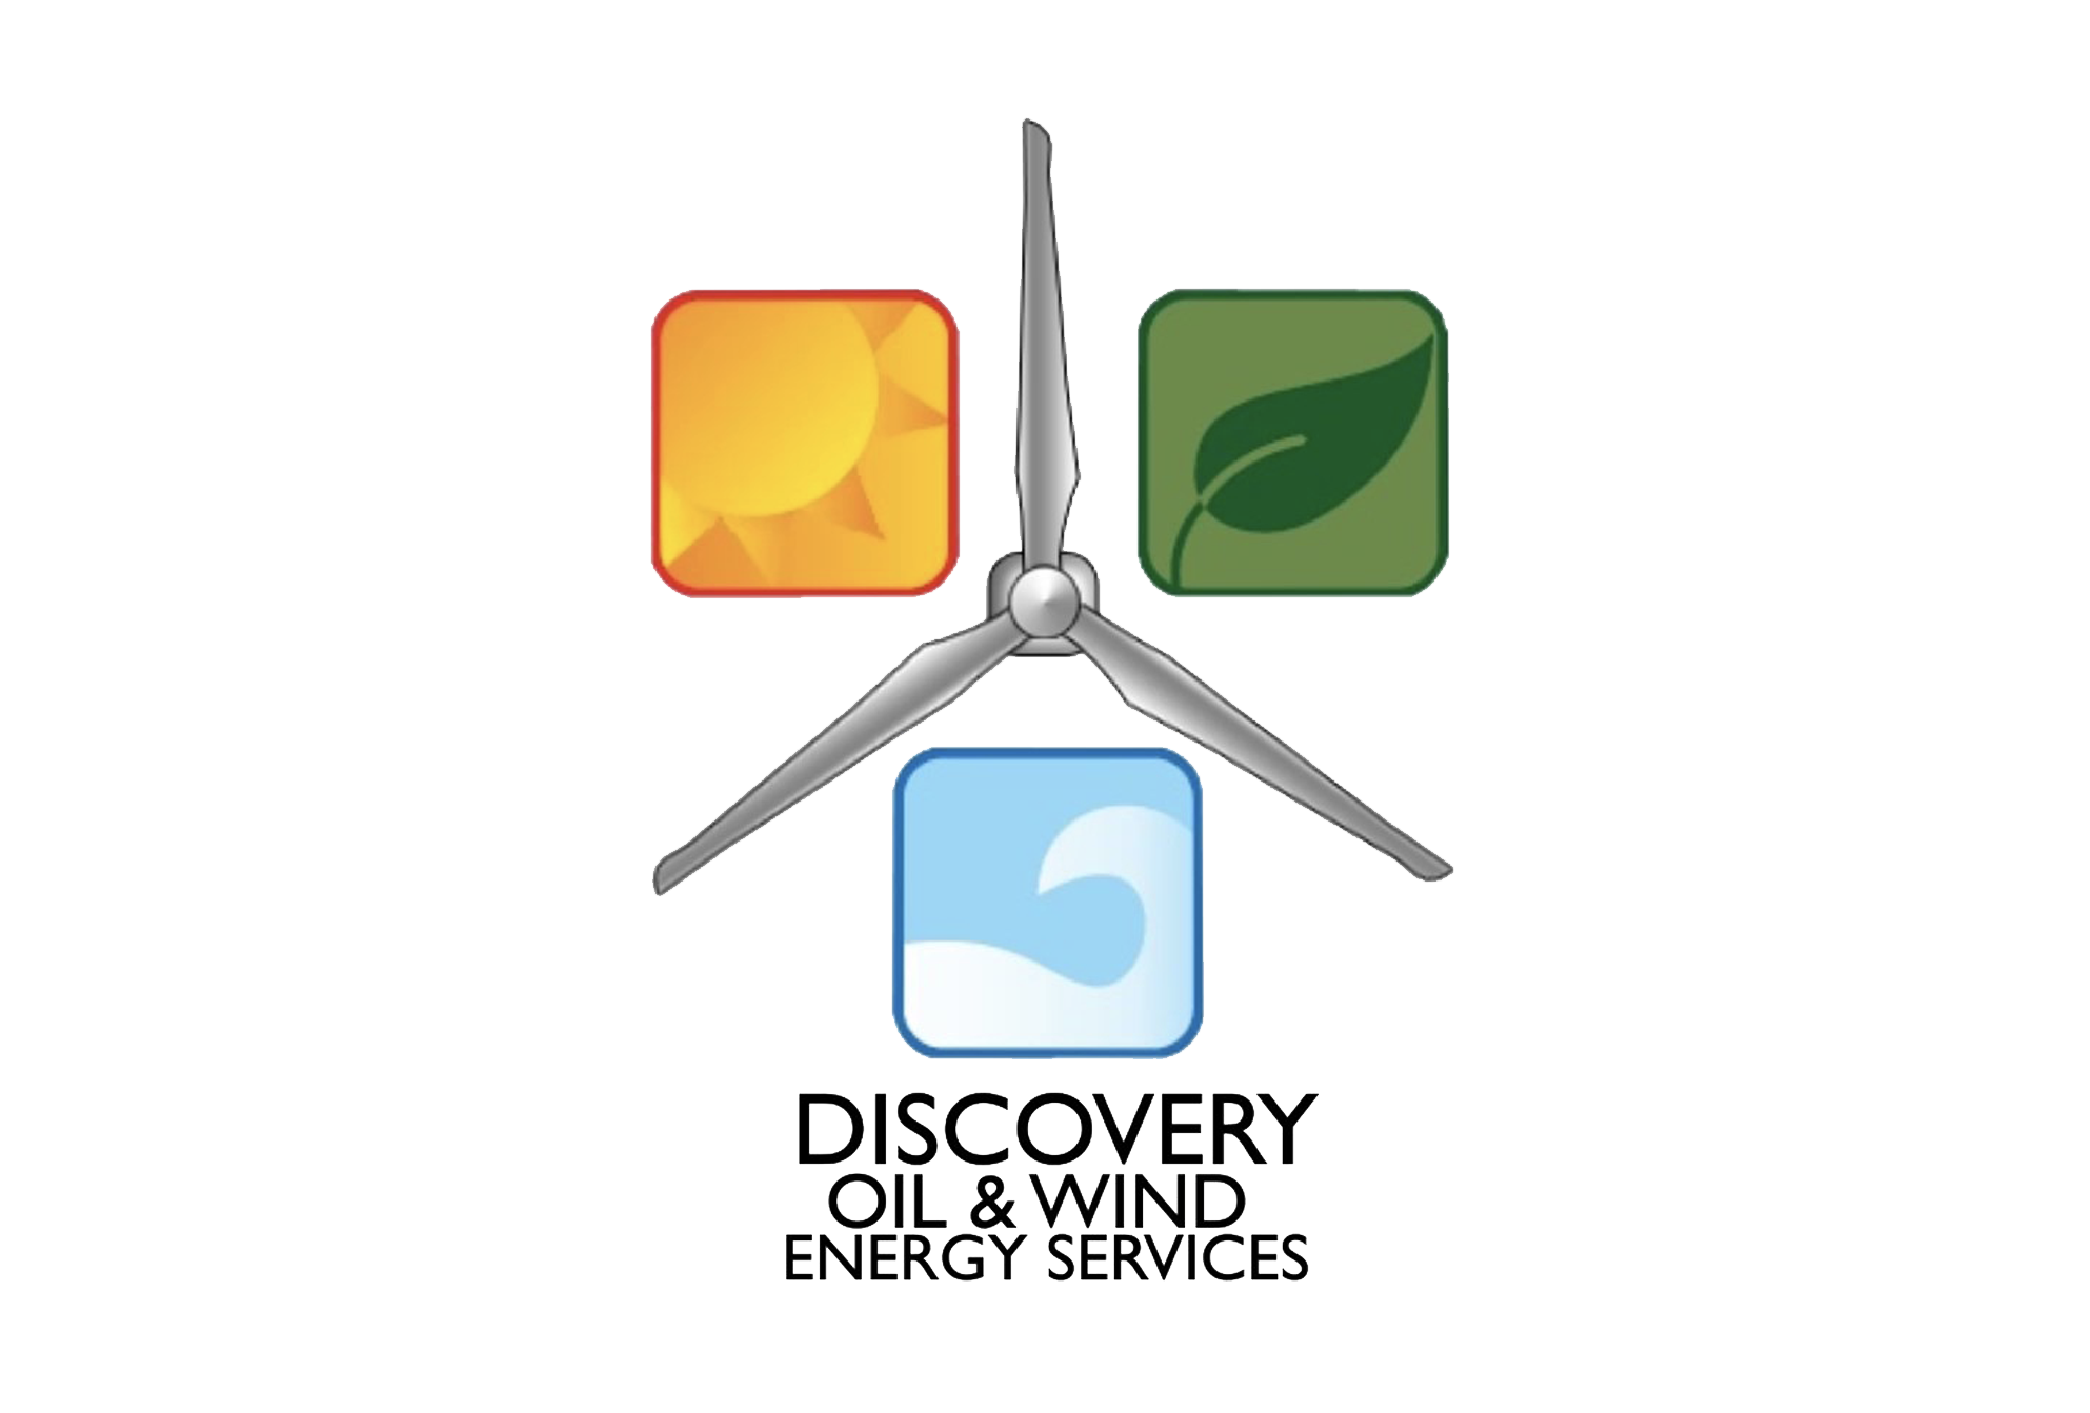 Piedmont client logos-01